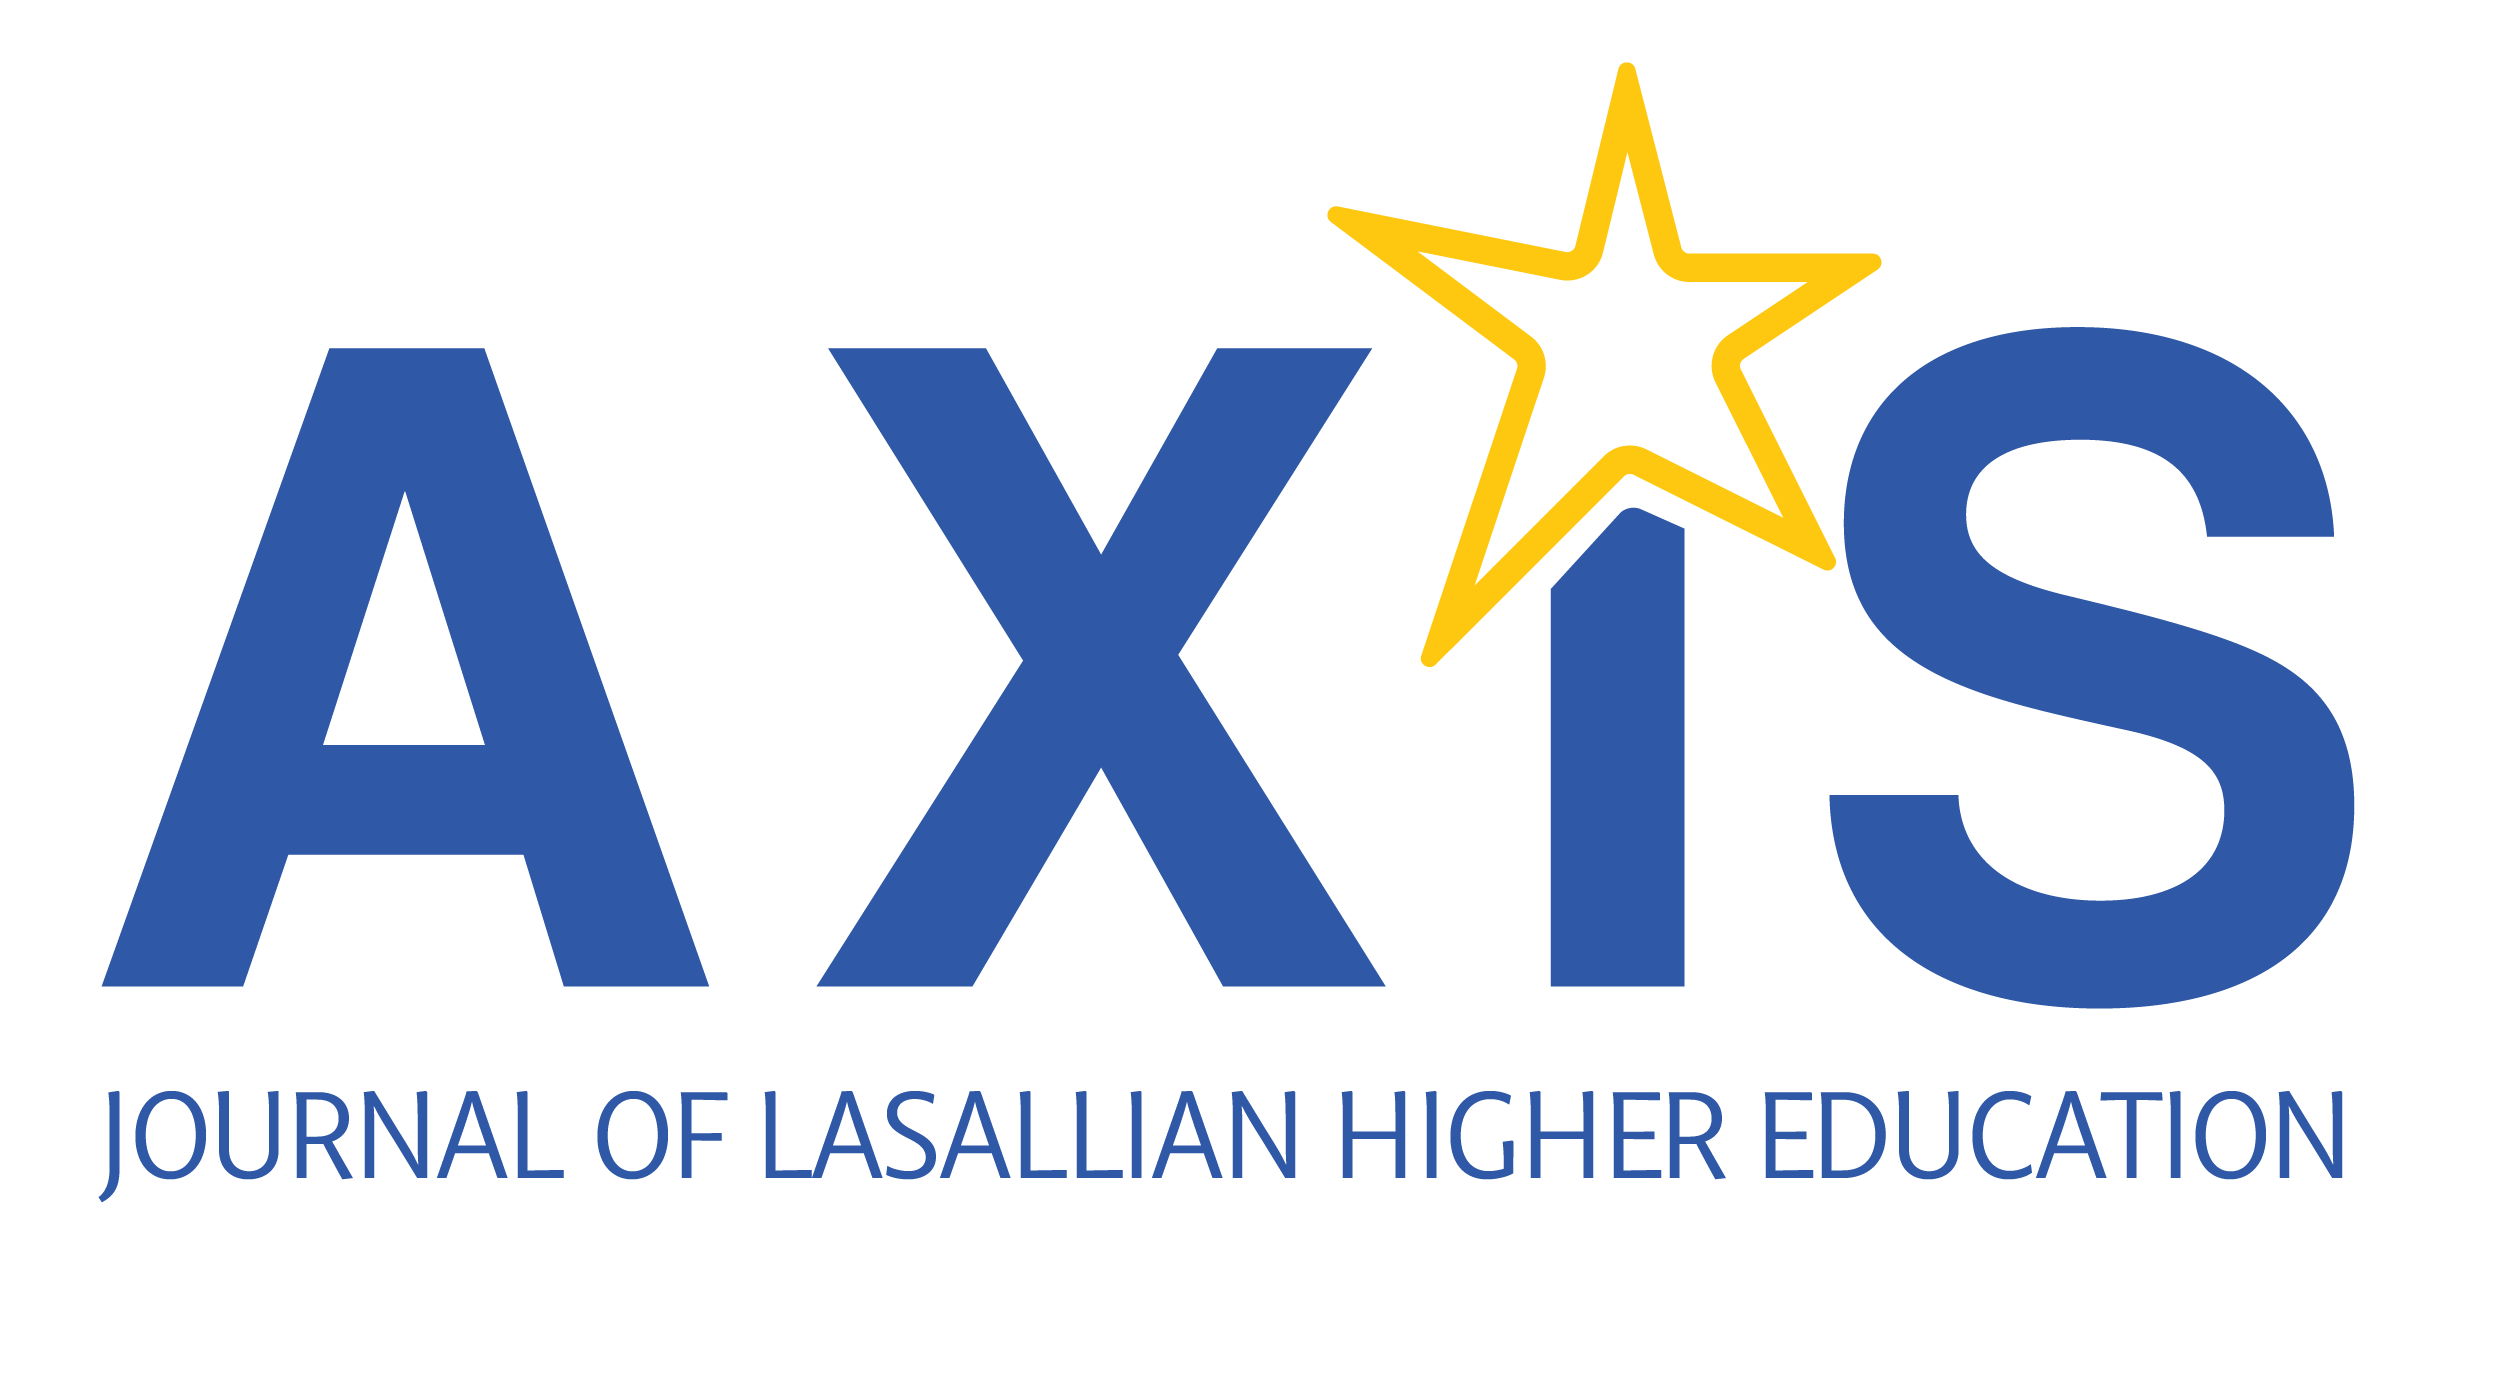 AXIS: Journal of Lasallian Higher Education